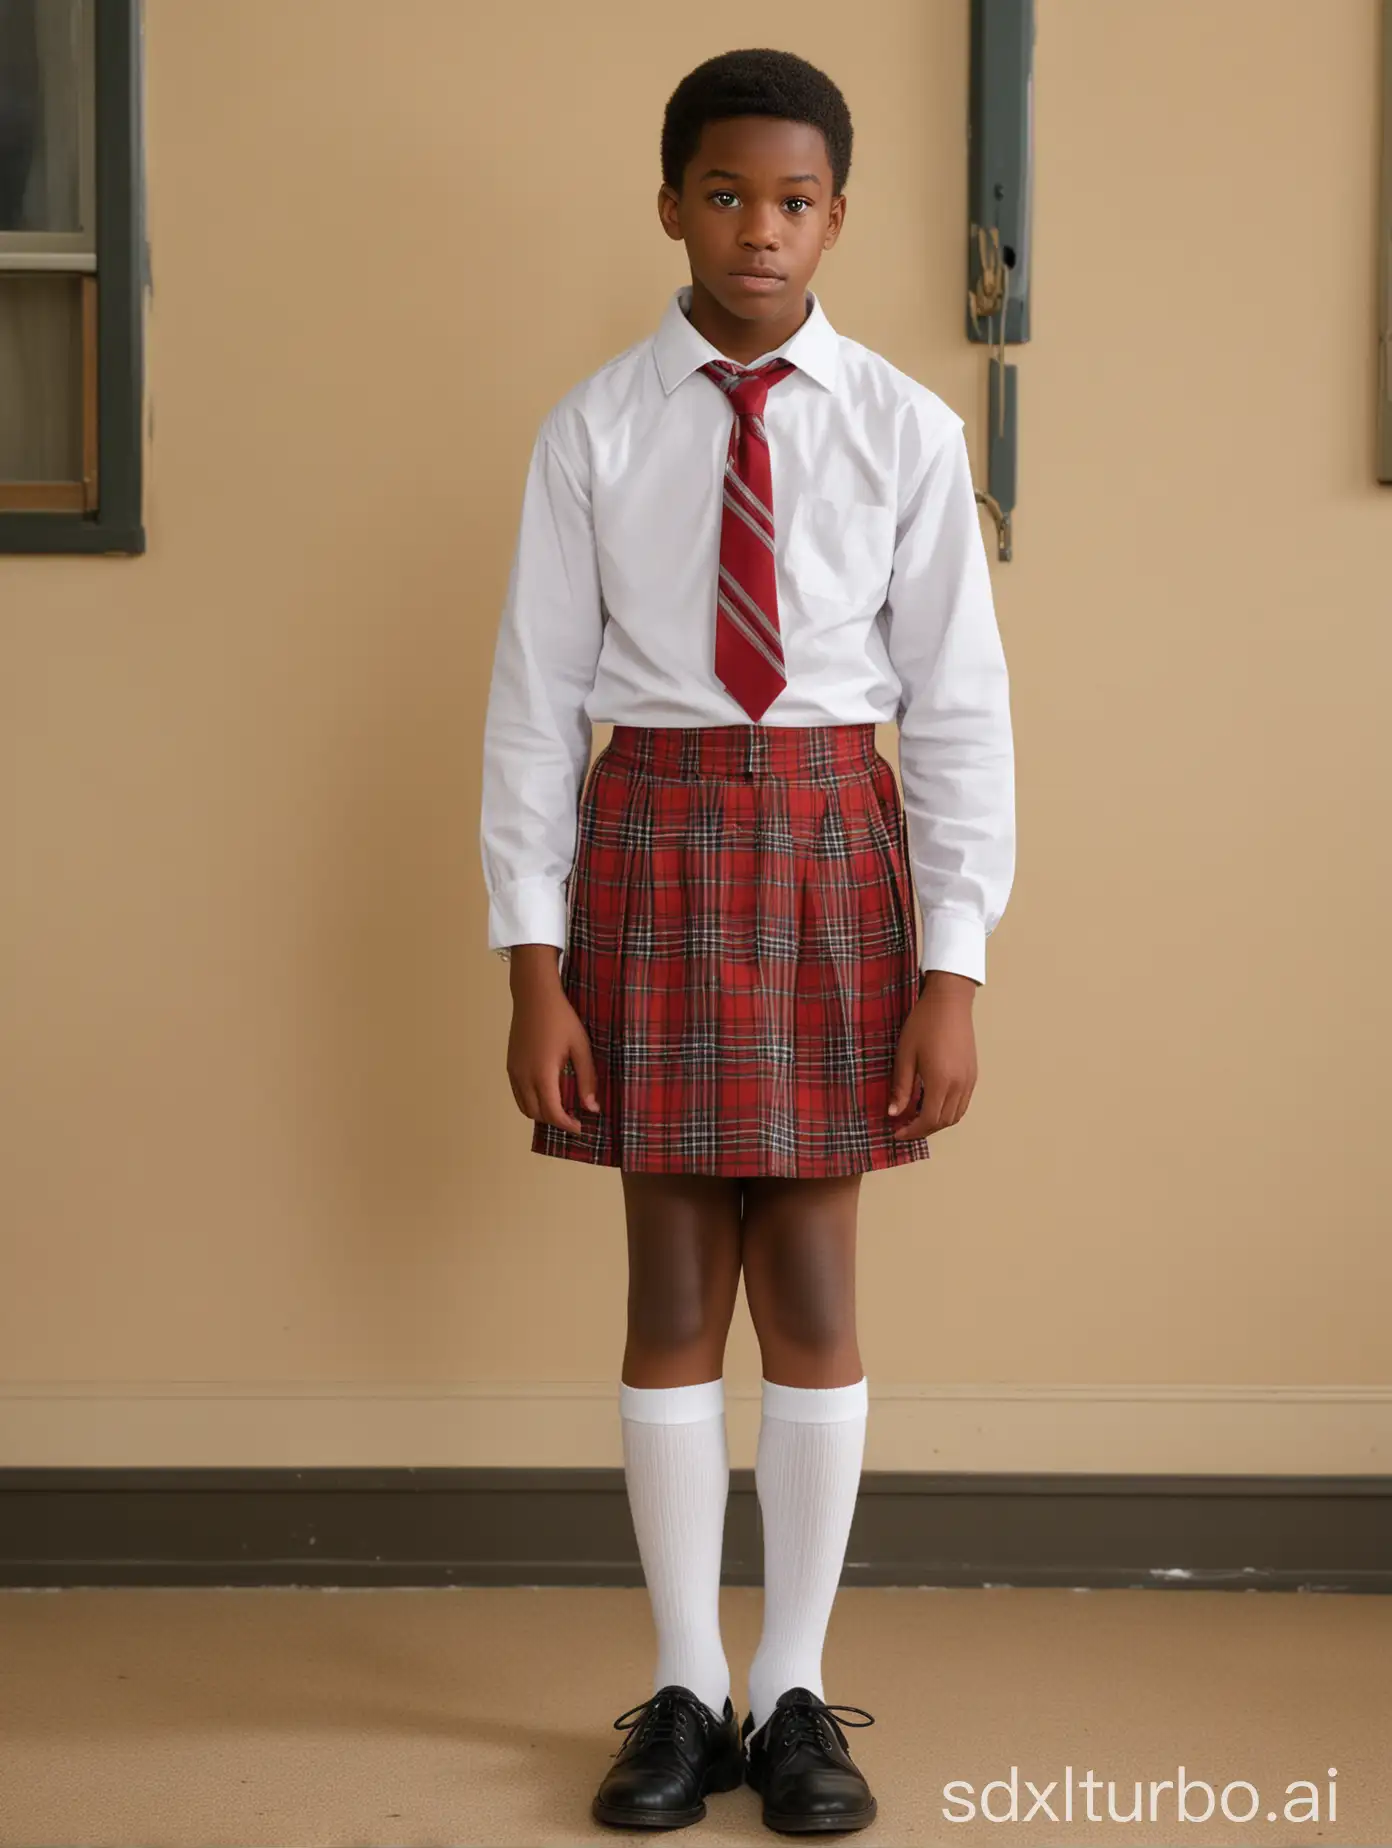 Adorable-17YearOld-African-American-Boy-in-Catholic-School-Uniform-Portrait